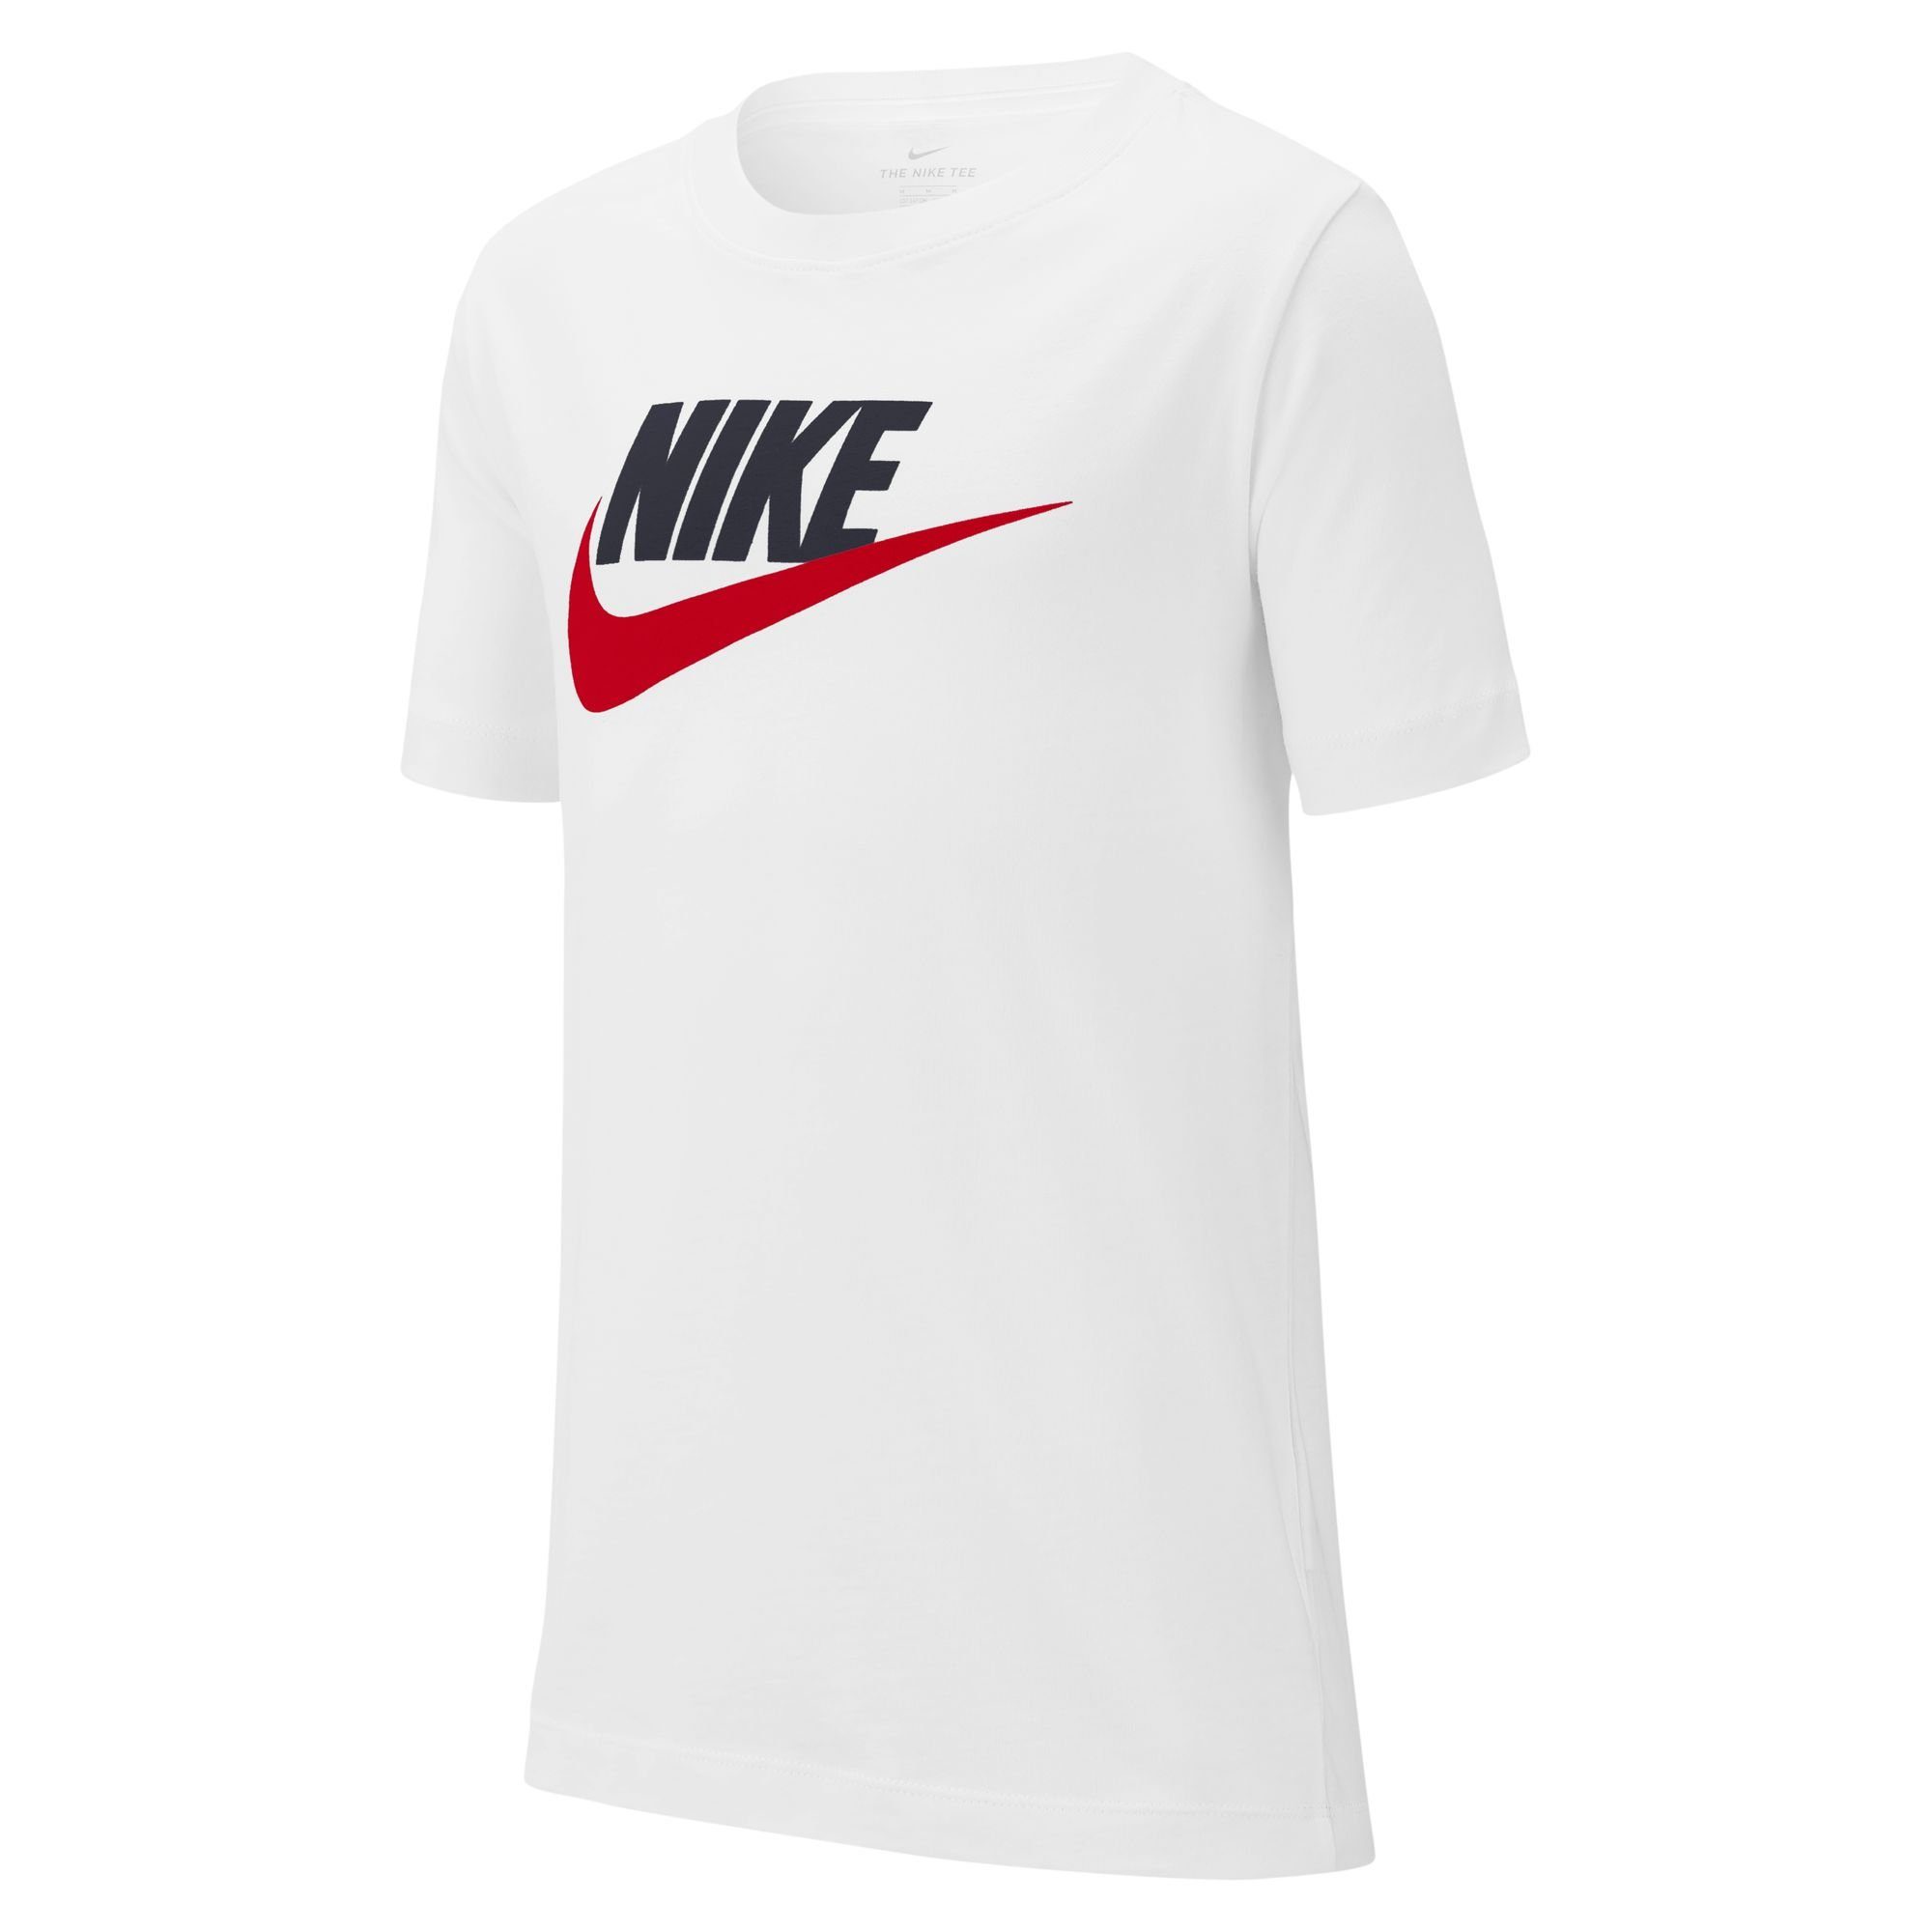 Nike Sportswear T-SHIRT weiß KIDS' COTTON T-Shirt BIG